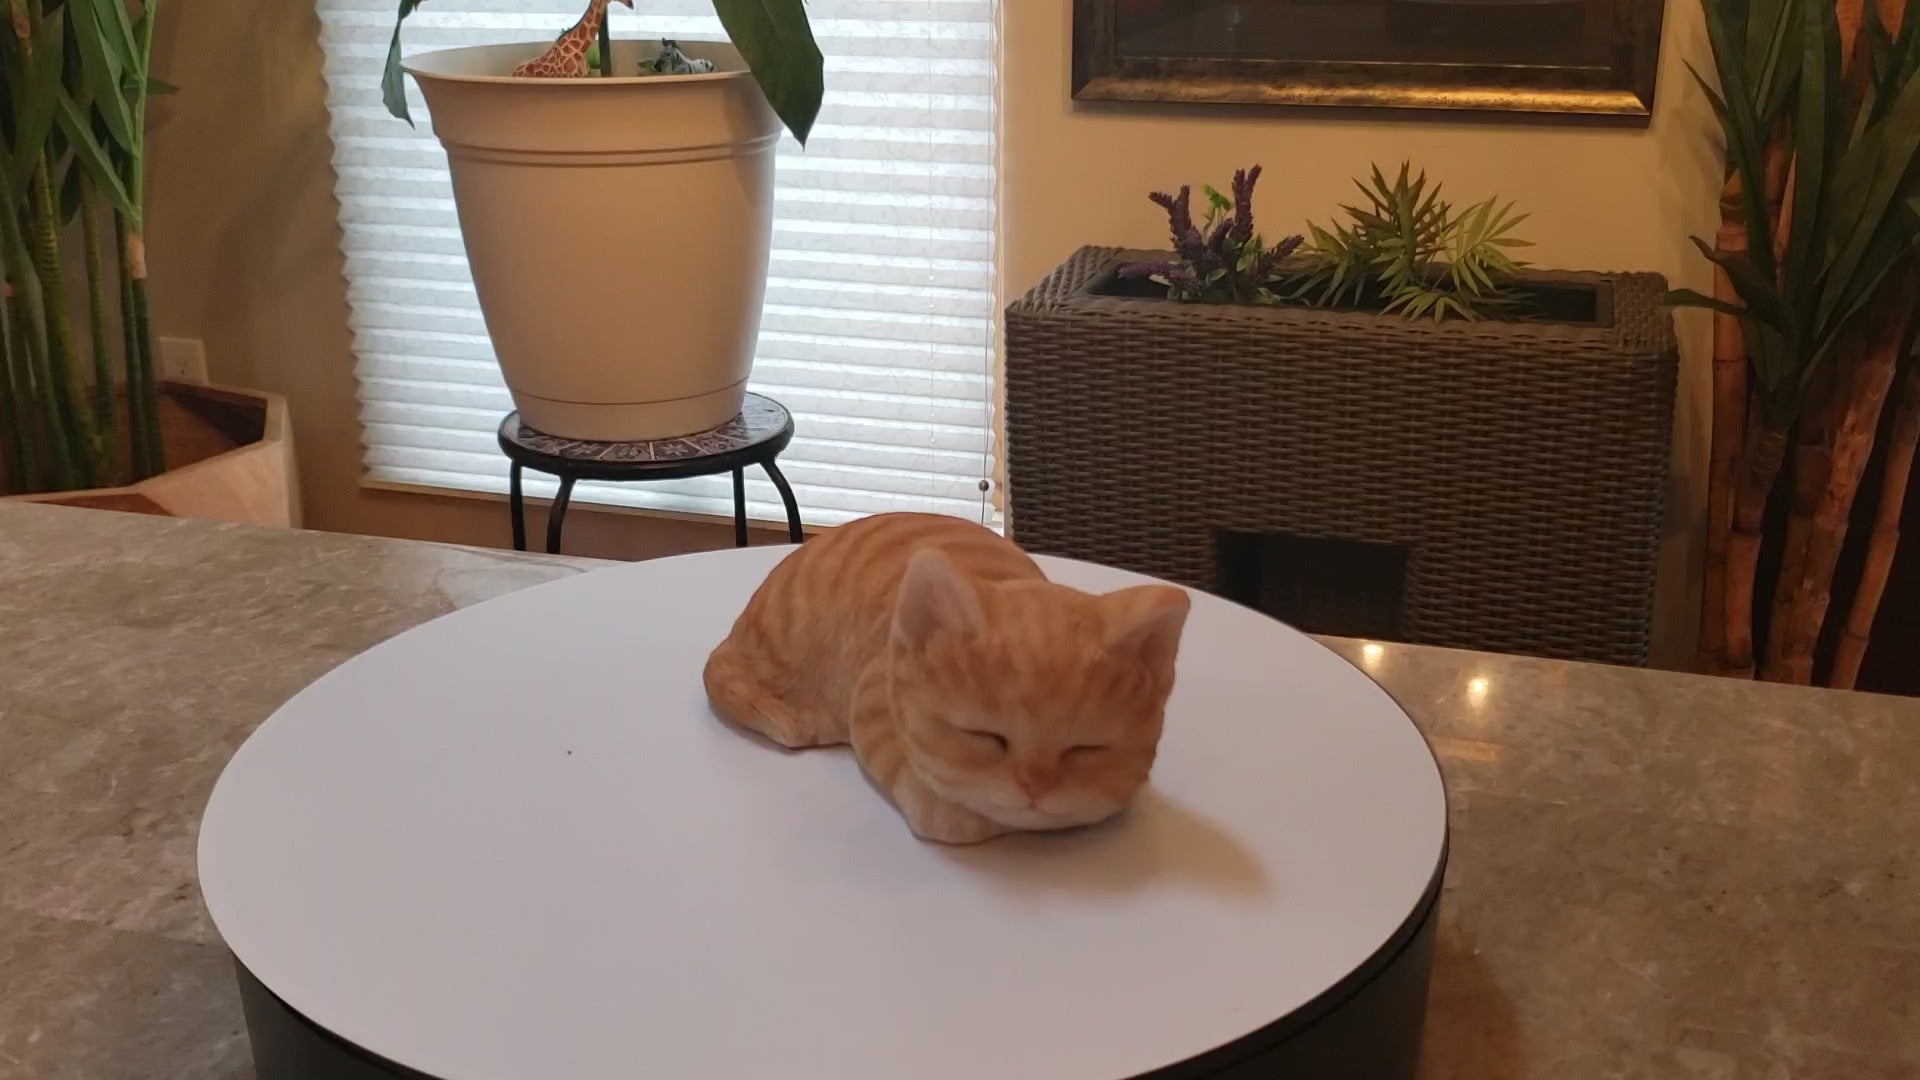 Auction for sale orange kitten statue